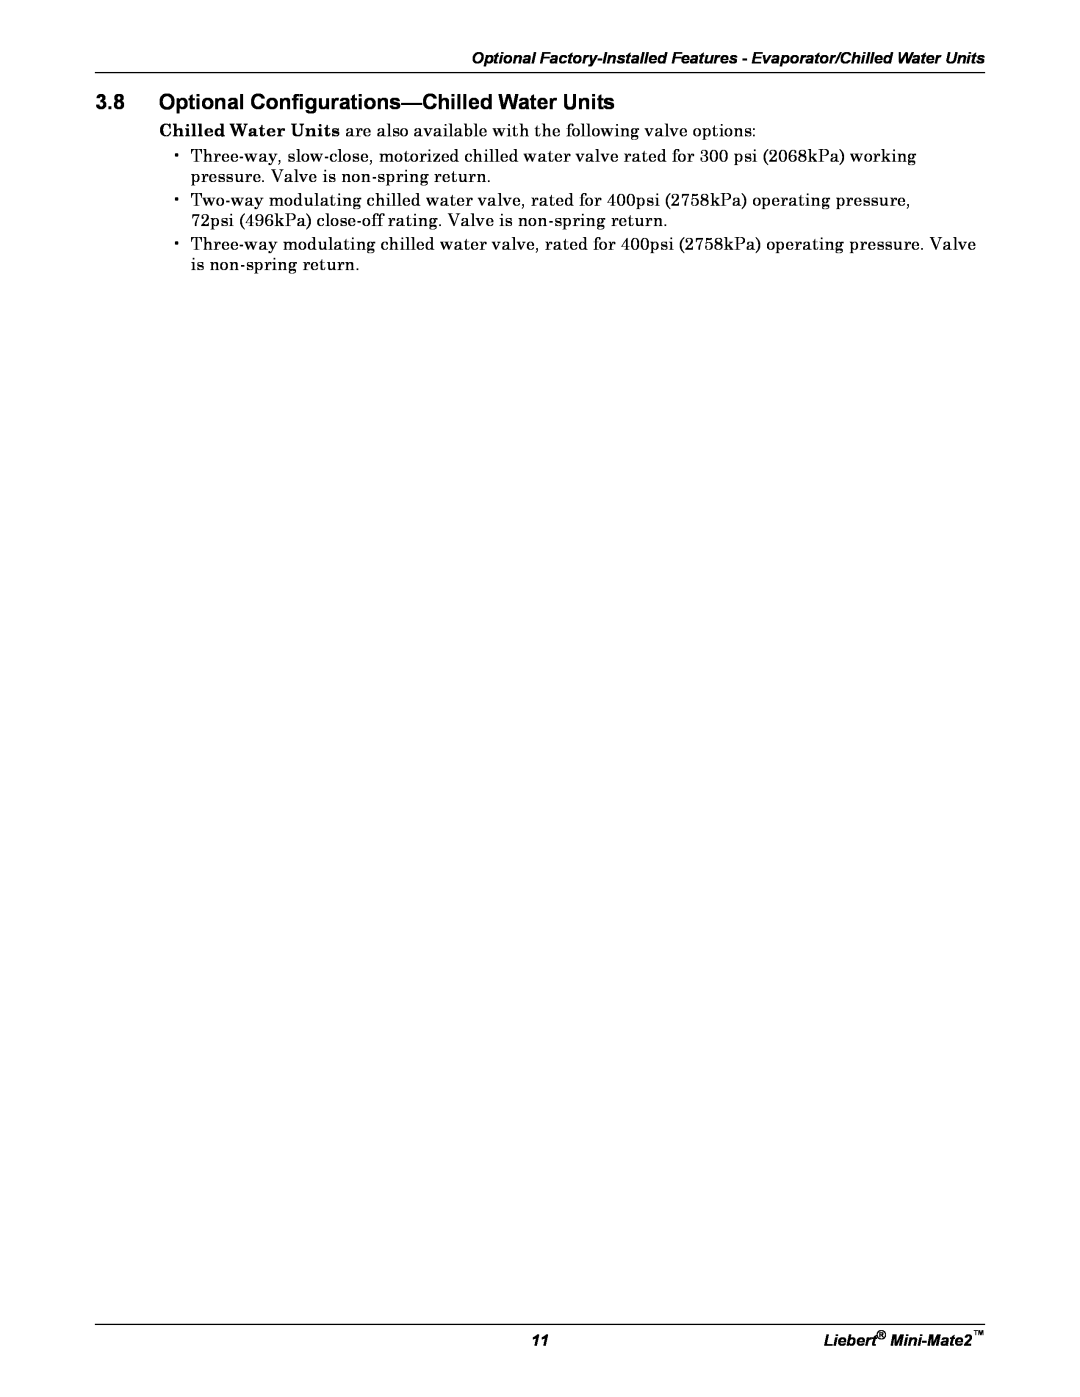 Emerson MINI-MATE2 user manual 3.8Optional Configurations-ChilledWater Units 